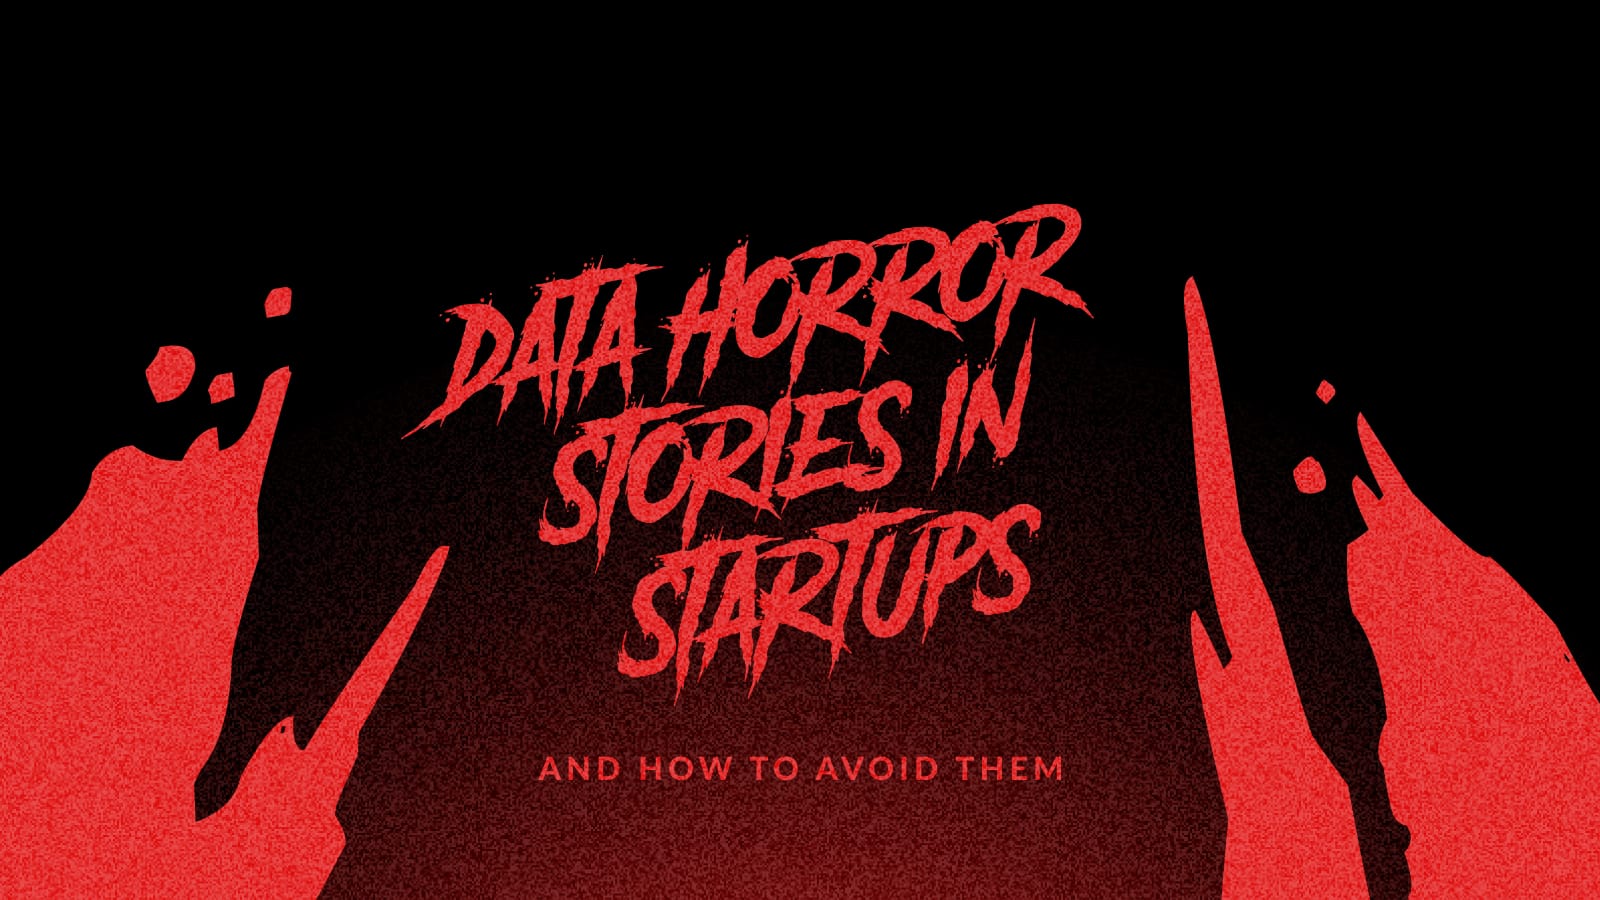 Halloween Edition: Data Horror stories in startups Image